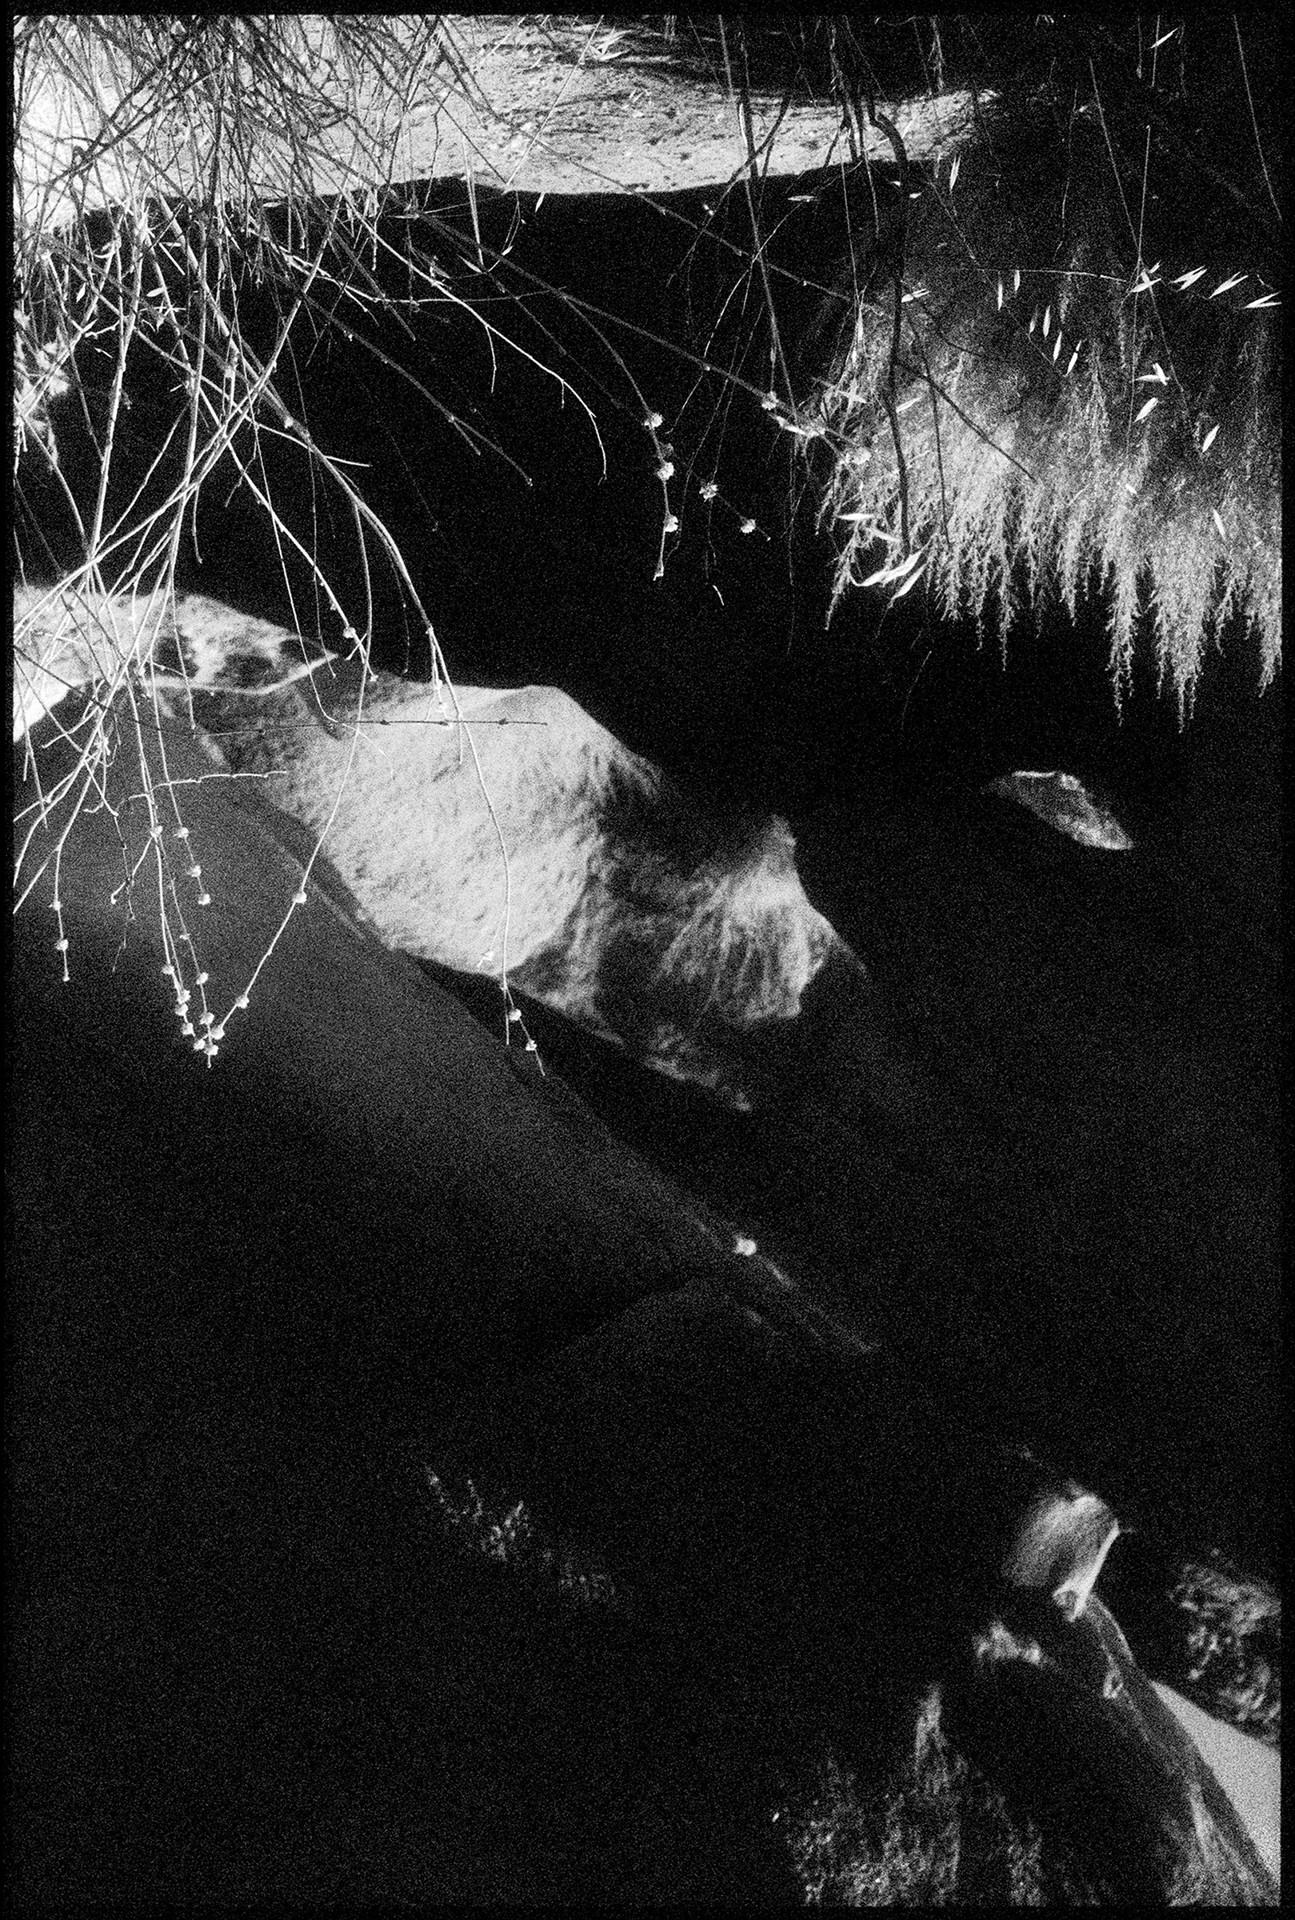 Edward Alfano Landscape Photograph - Vasquez Rocks IV, Agua Dulce, CA - Contemporary Pigment Print (Black+White)